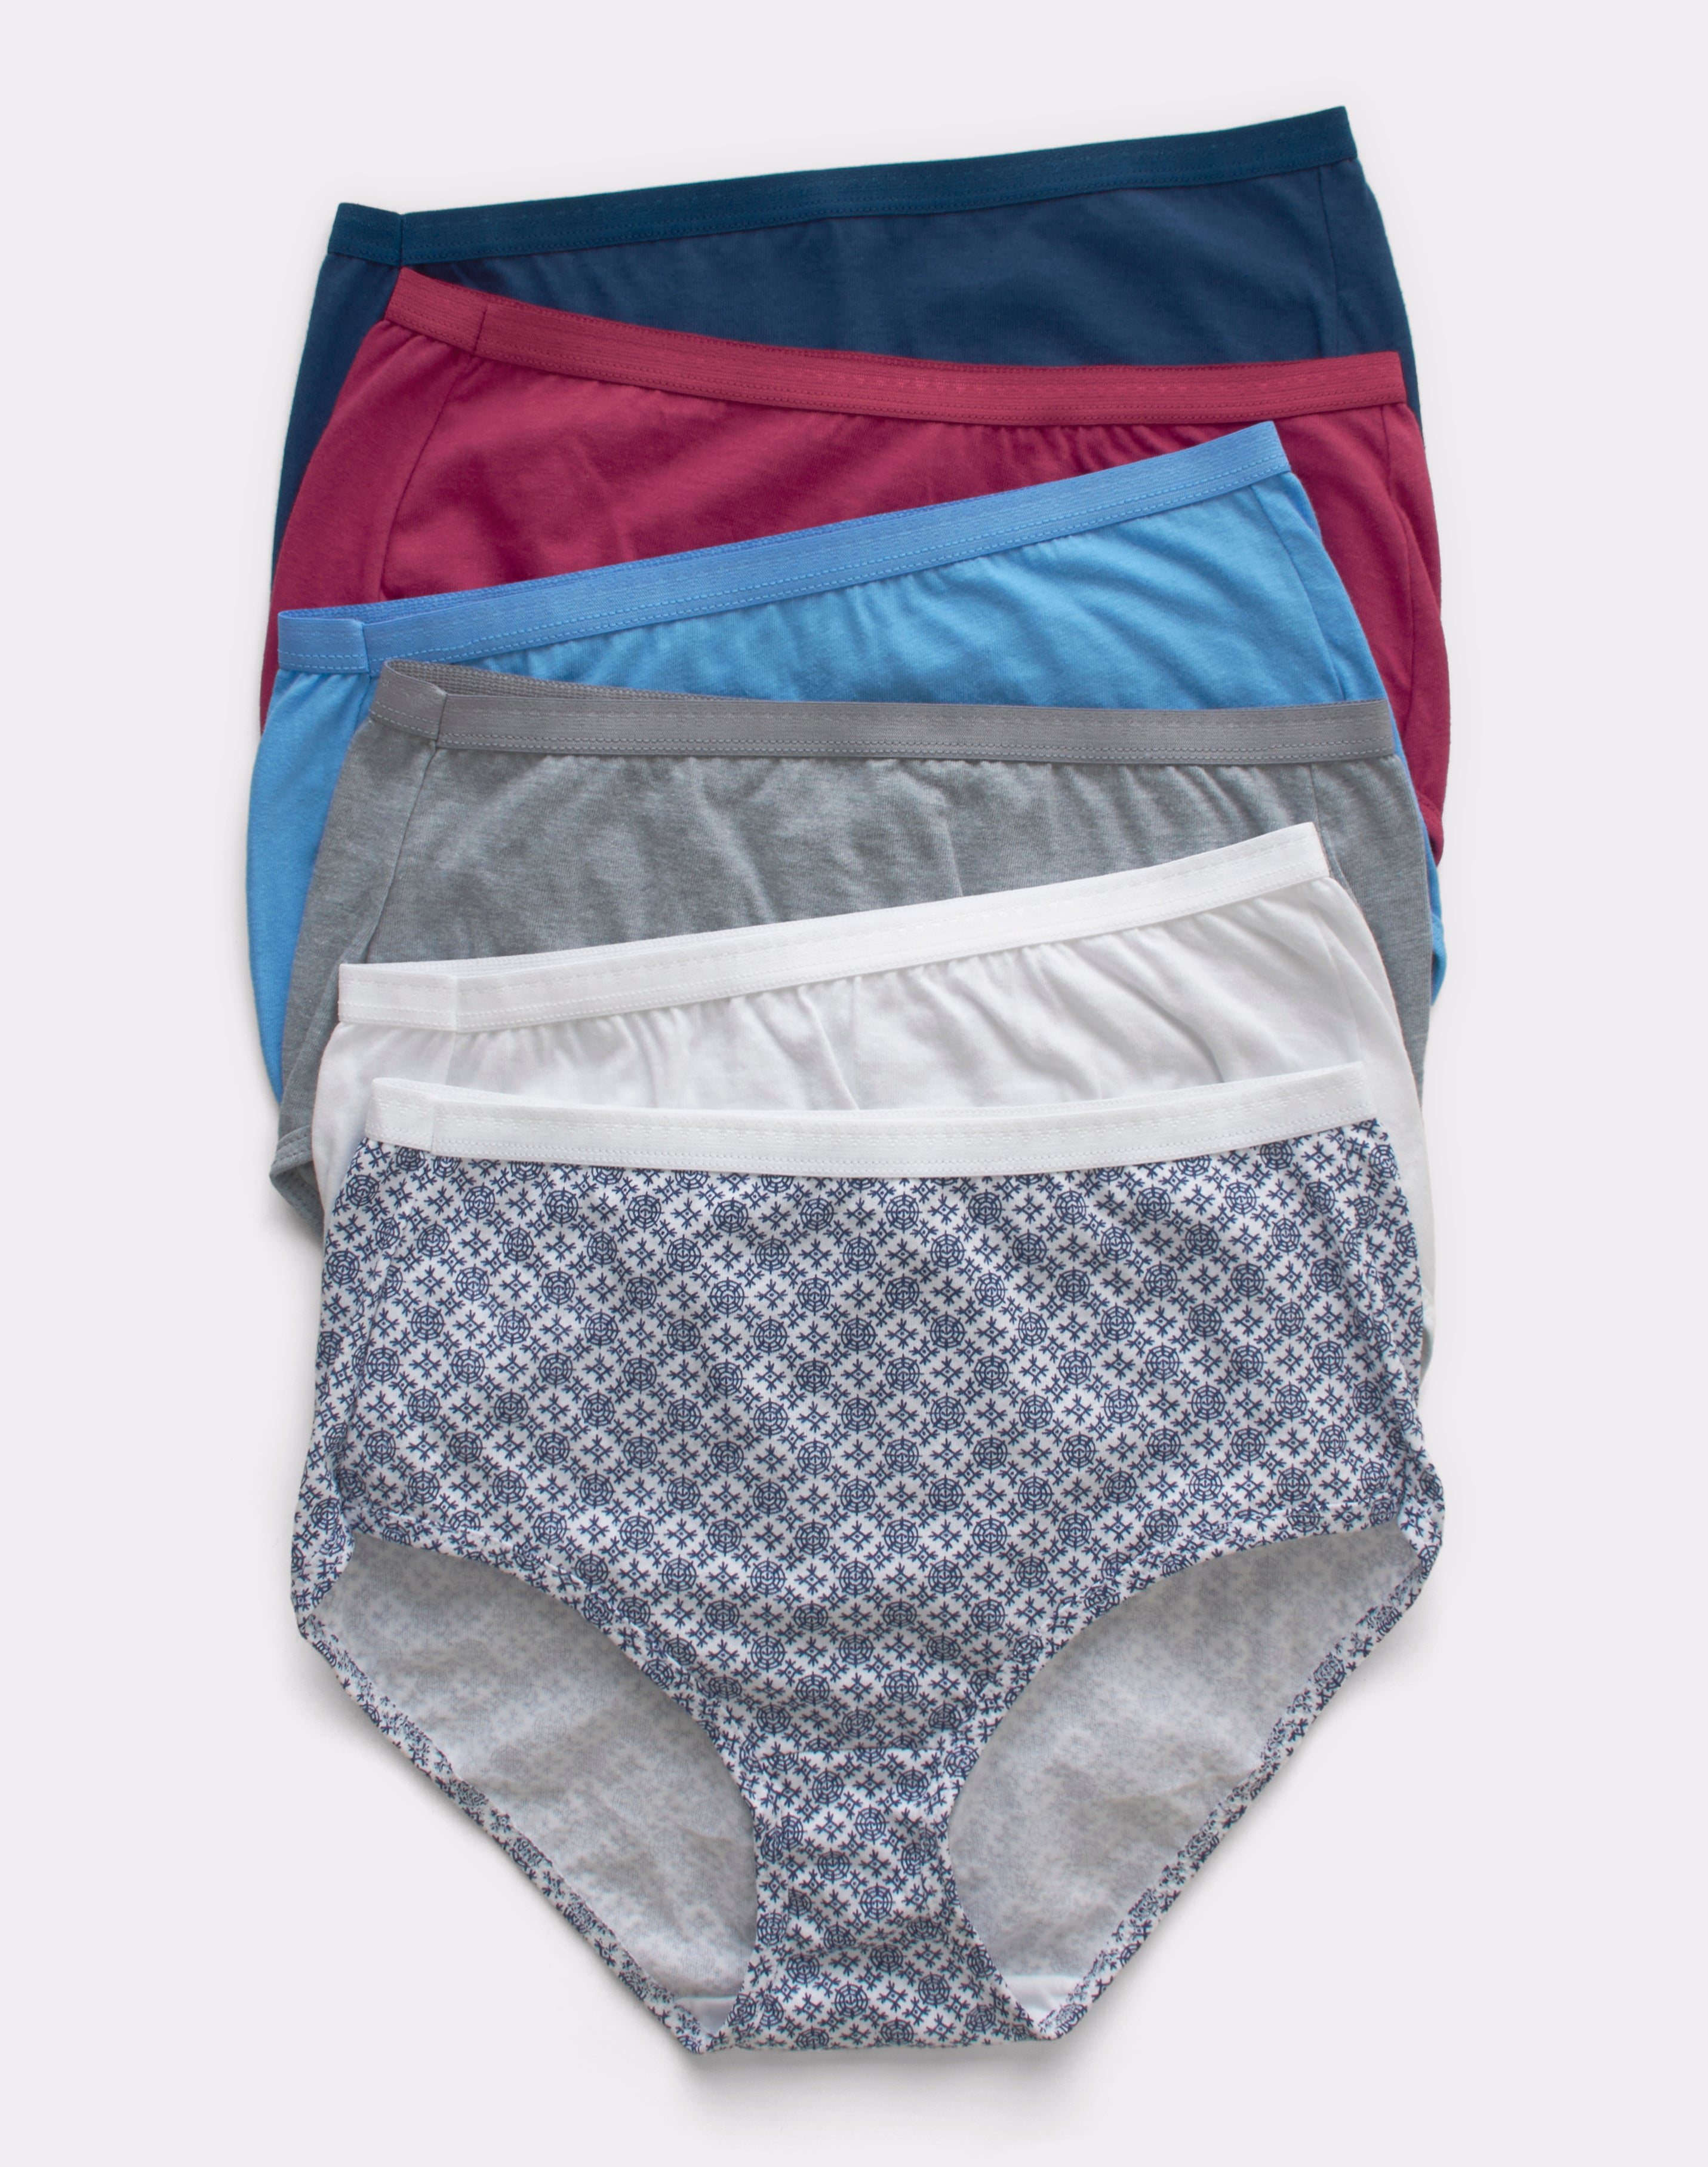 Hanes, Intimates & Sleepwear, Hanes Xtemp Womens Underwear